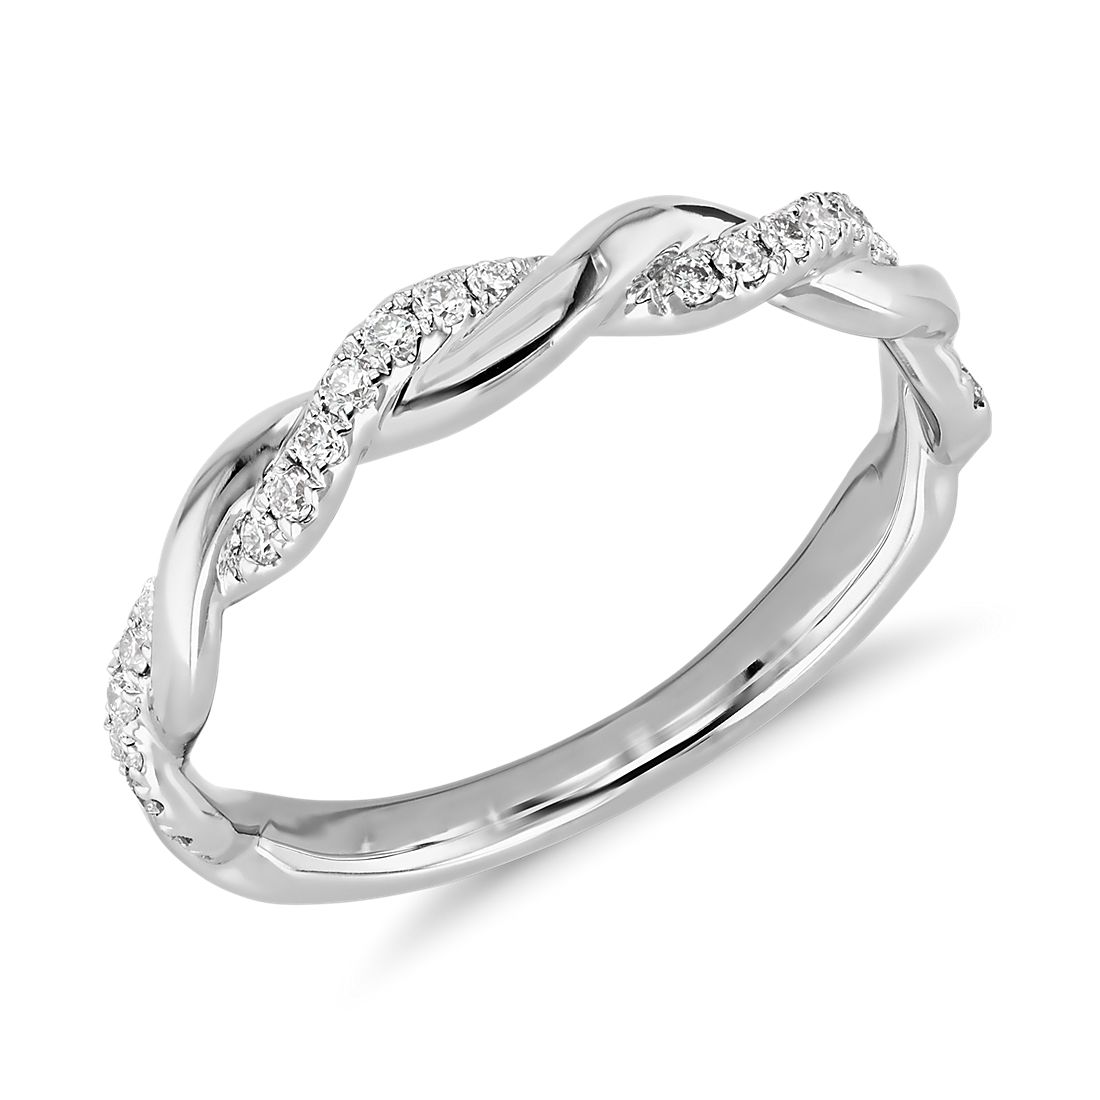 ZAC ZAC POSEN Twisting Diamond Ring in 14k White Gold (1/5 ct. tw.)